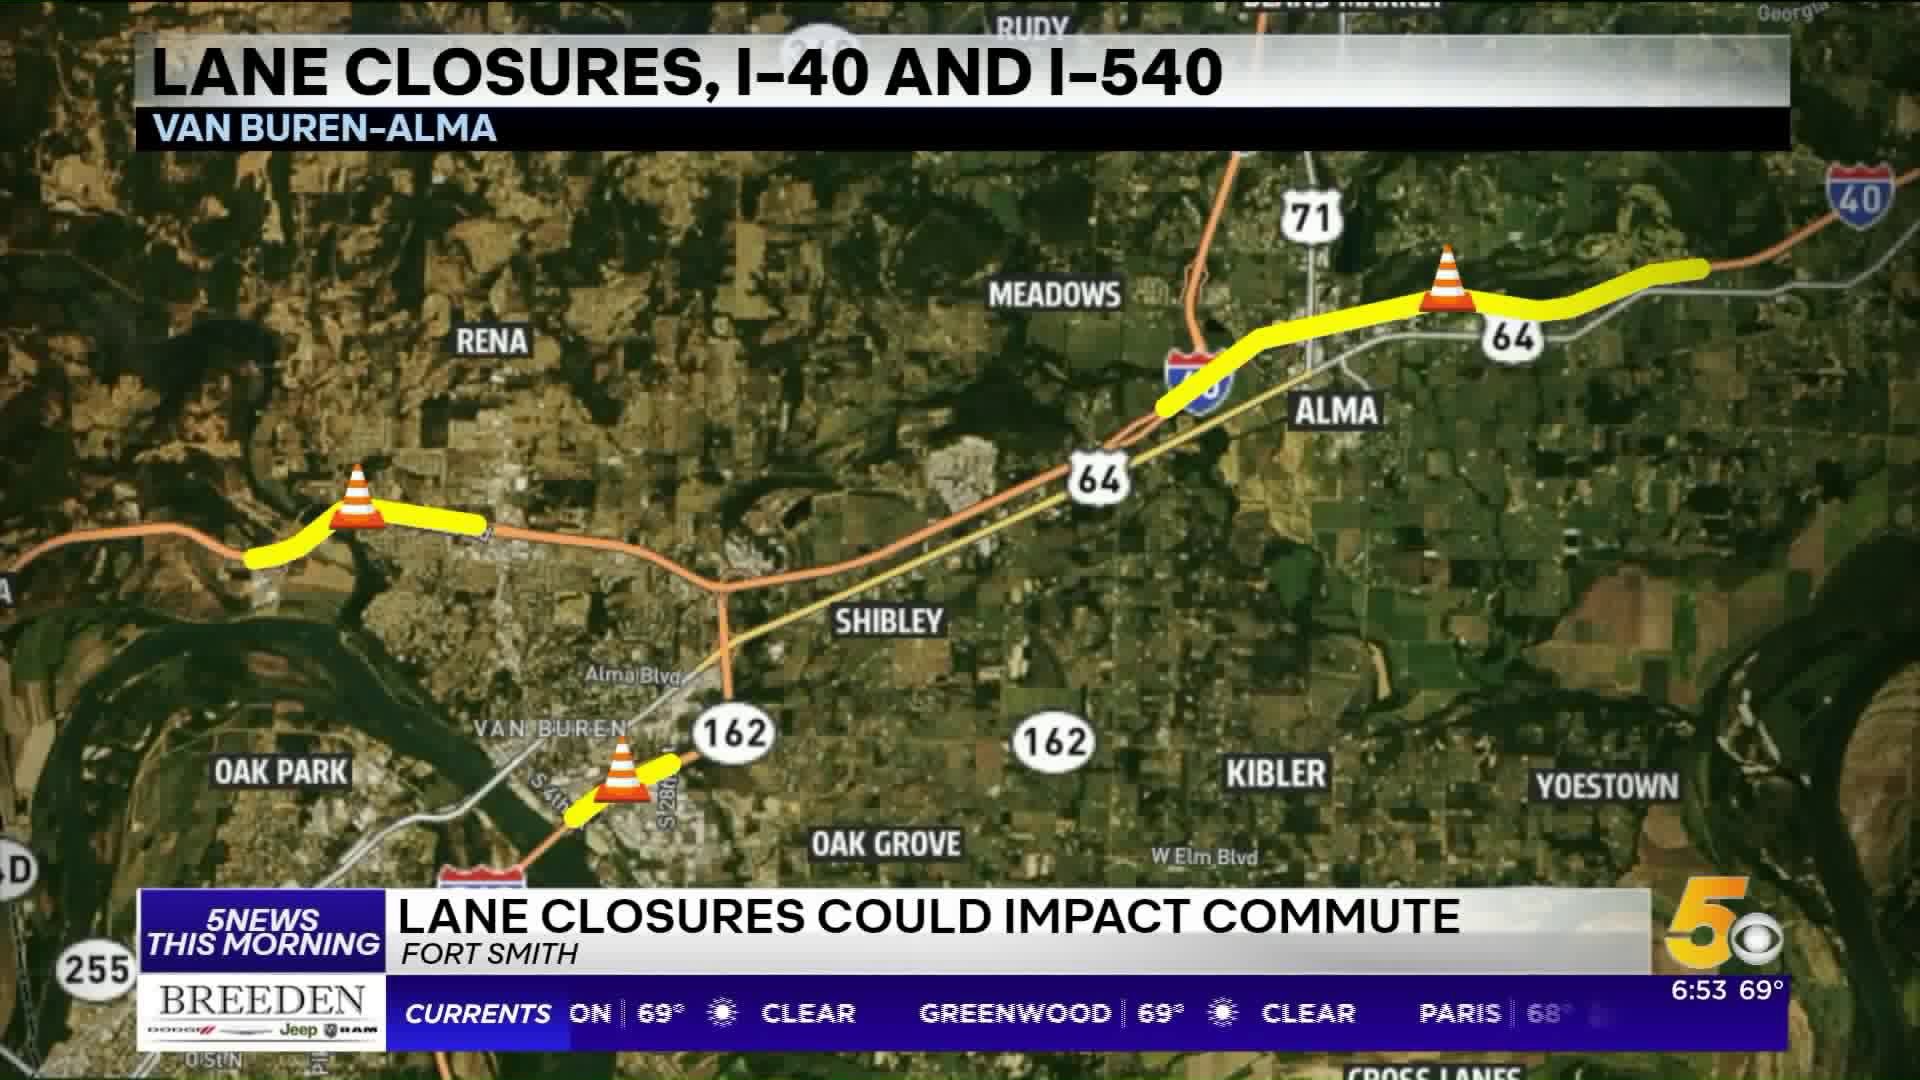 I-40, I-540 Lane Closures